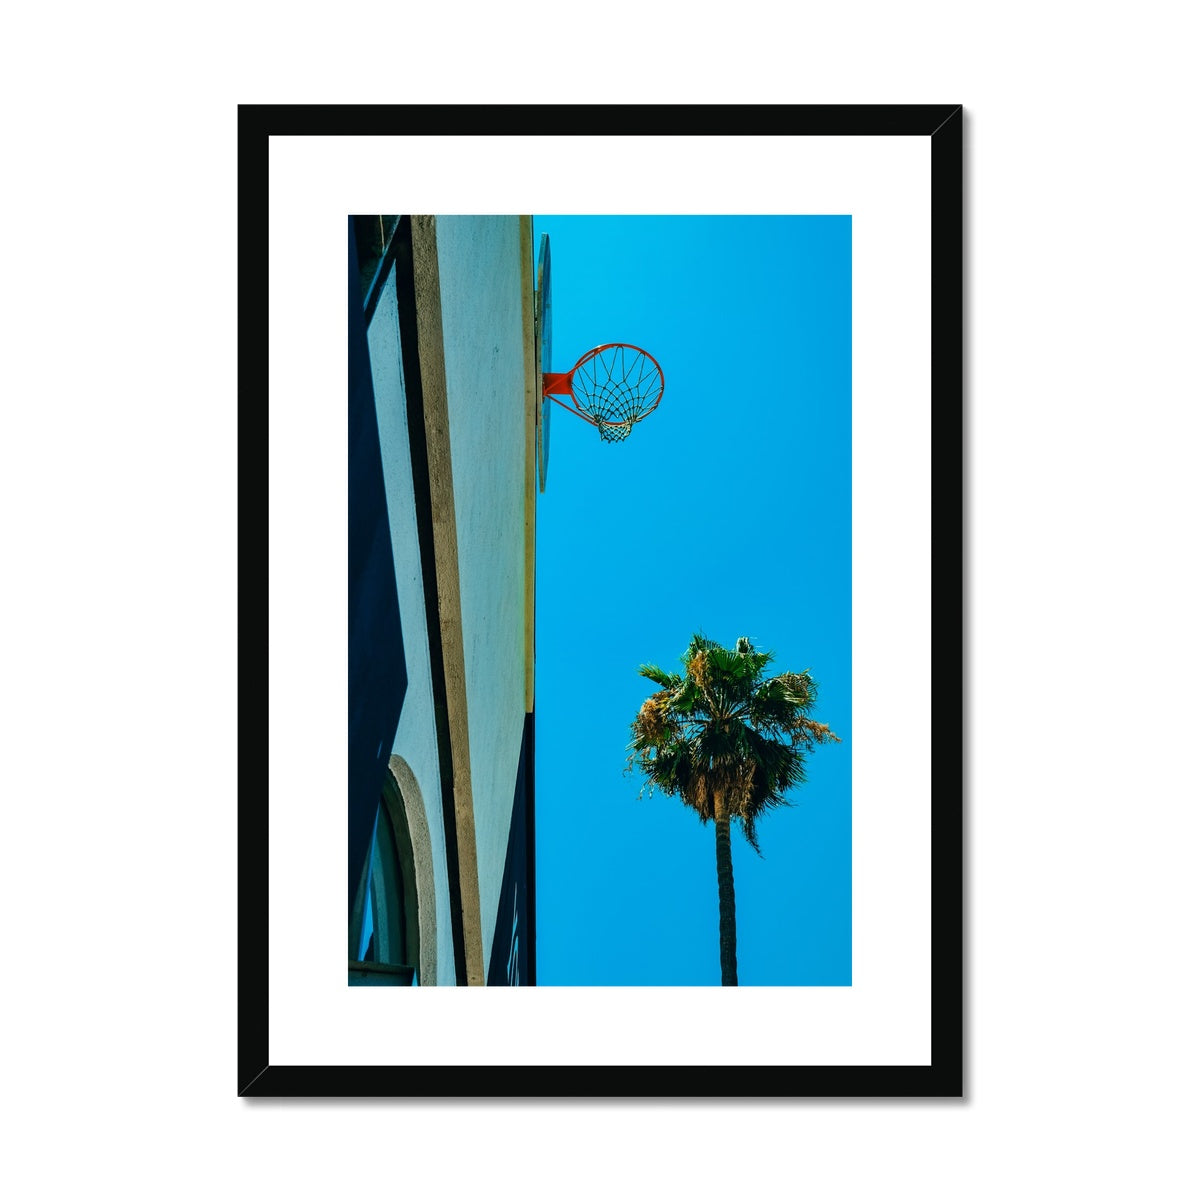 Taking Shots Vol.2 #8 - Los Angeles, CA